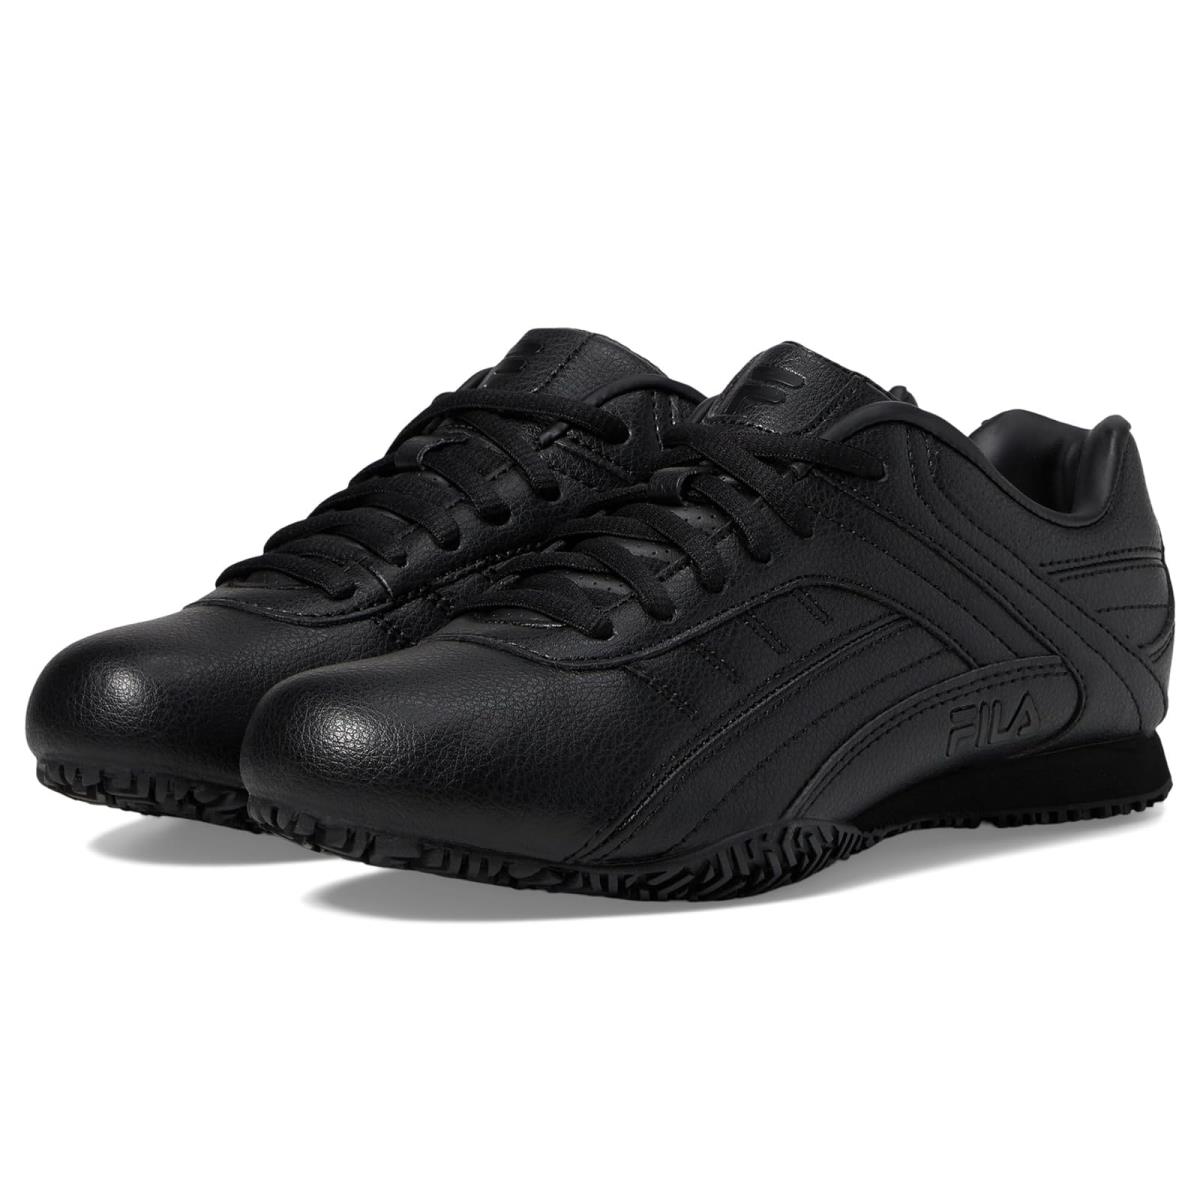 Woman`s Sneakers Athletic Shoes Fila Memory Elleray 5 Slip Resistant Black/Black/Black